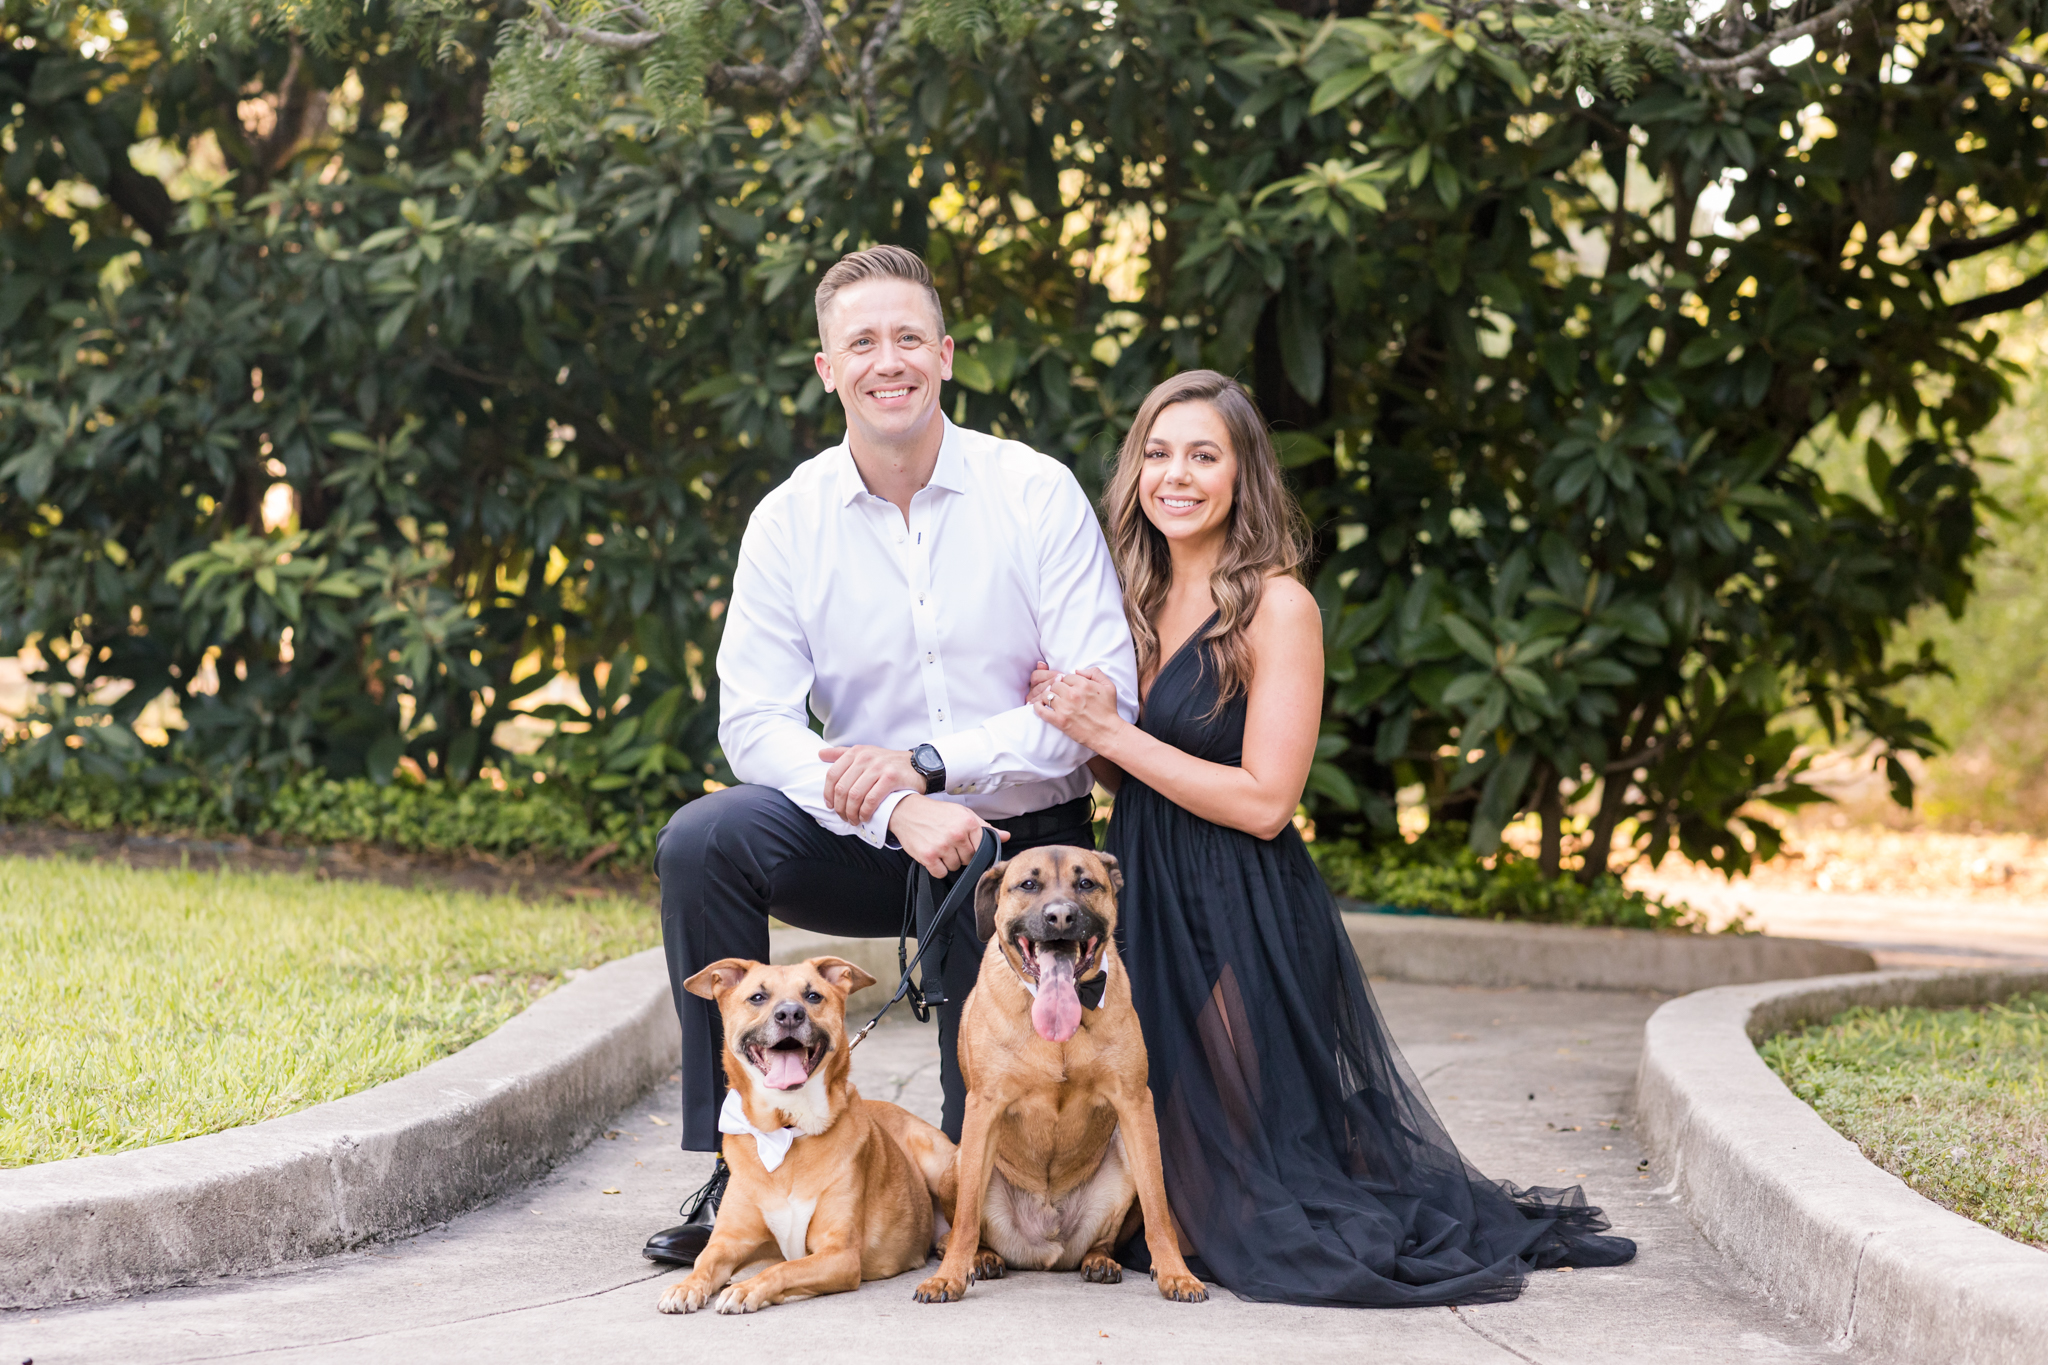 An Elegant Engagement Session at Landa Library with Dogs in San Antonio, TX by Dawn Elizabeth Studios, San Antonio Wedding Photographer & Portrait Photographer